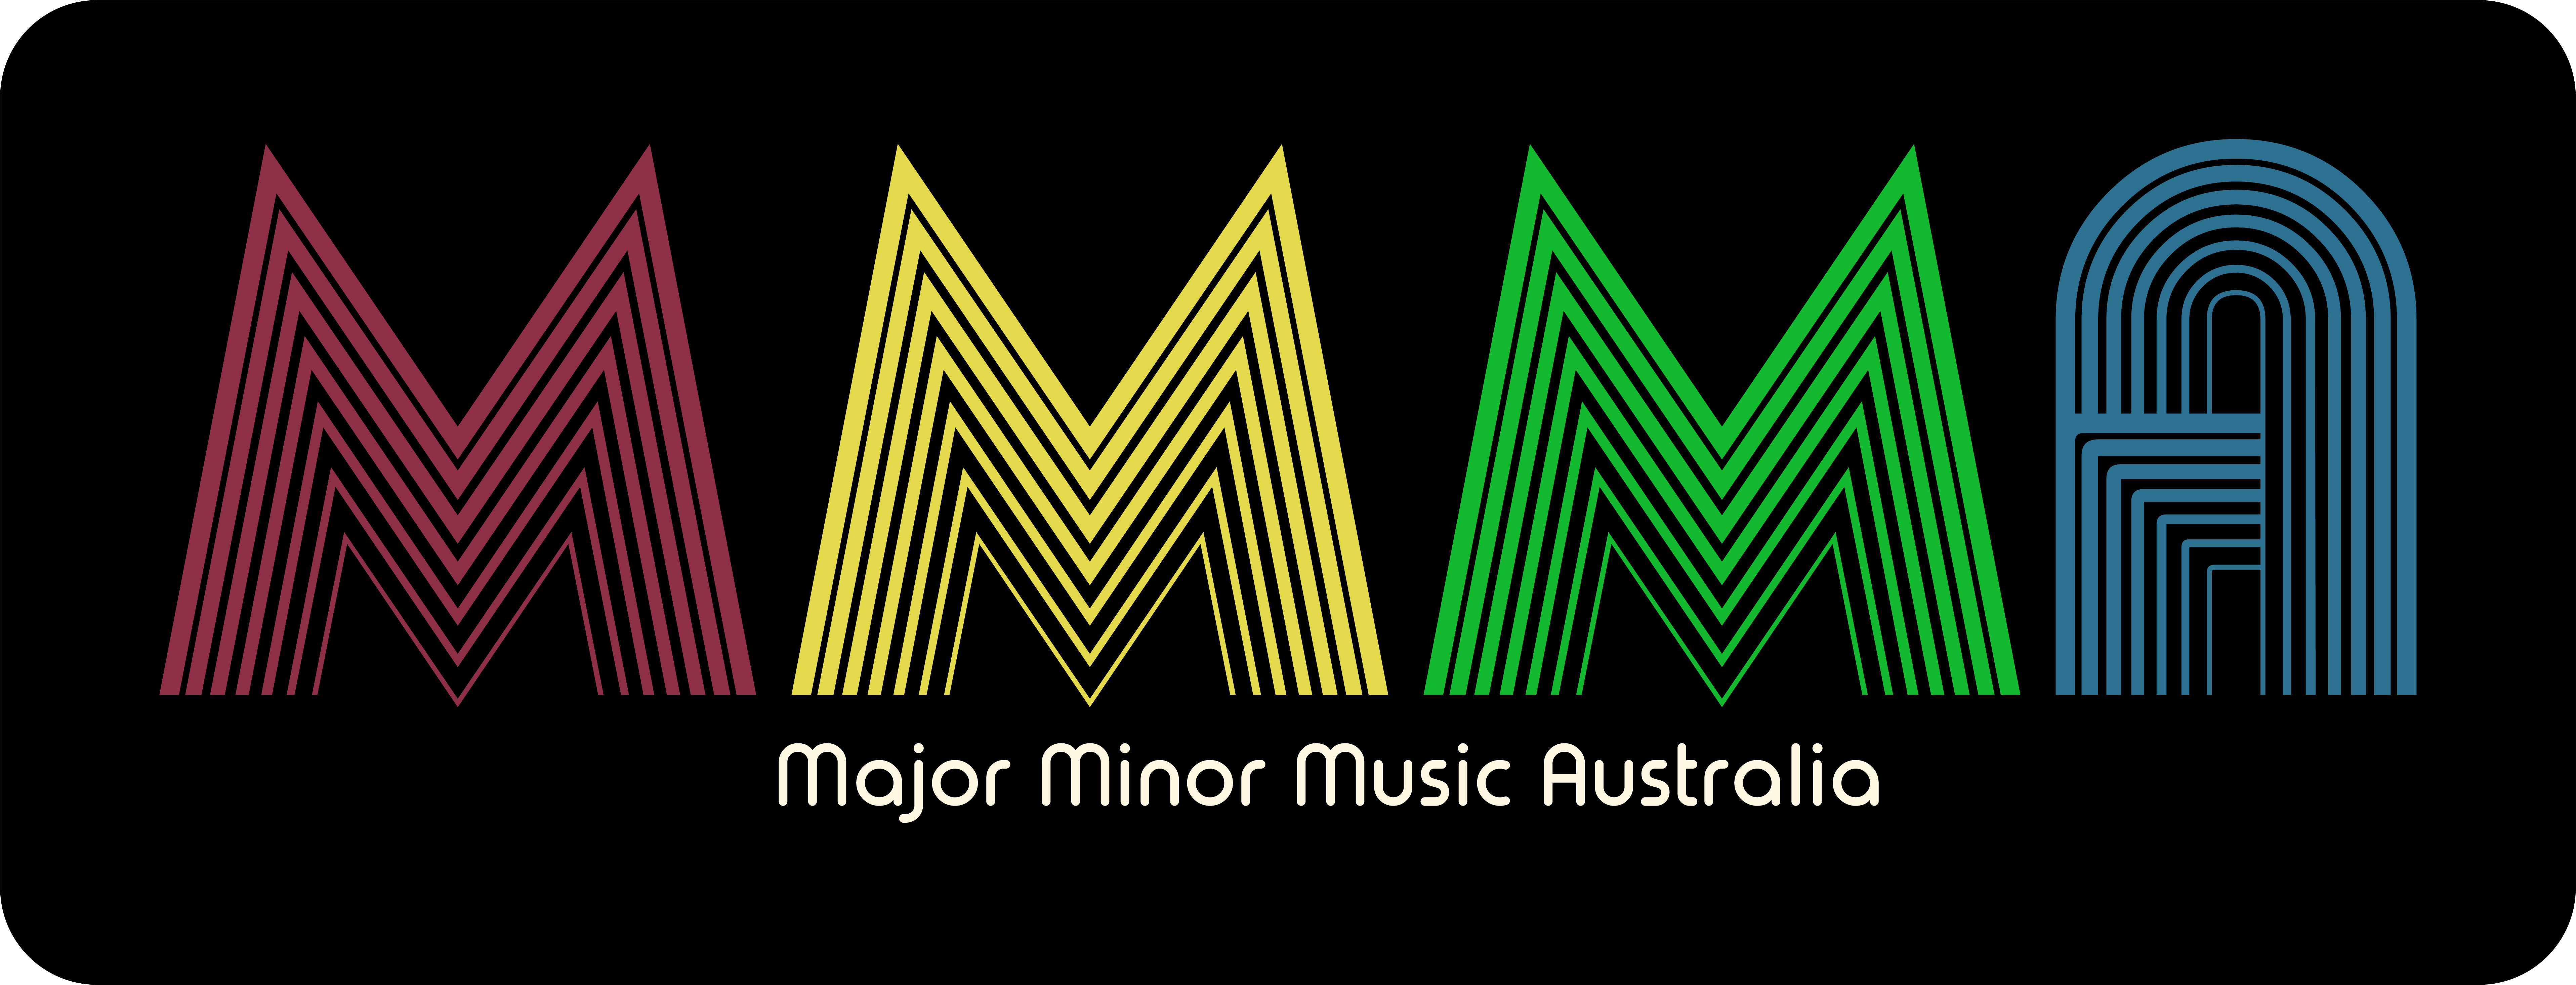 Major Minor Music Australia